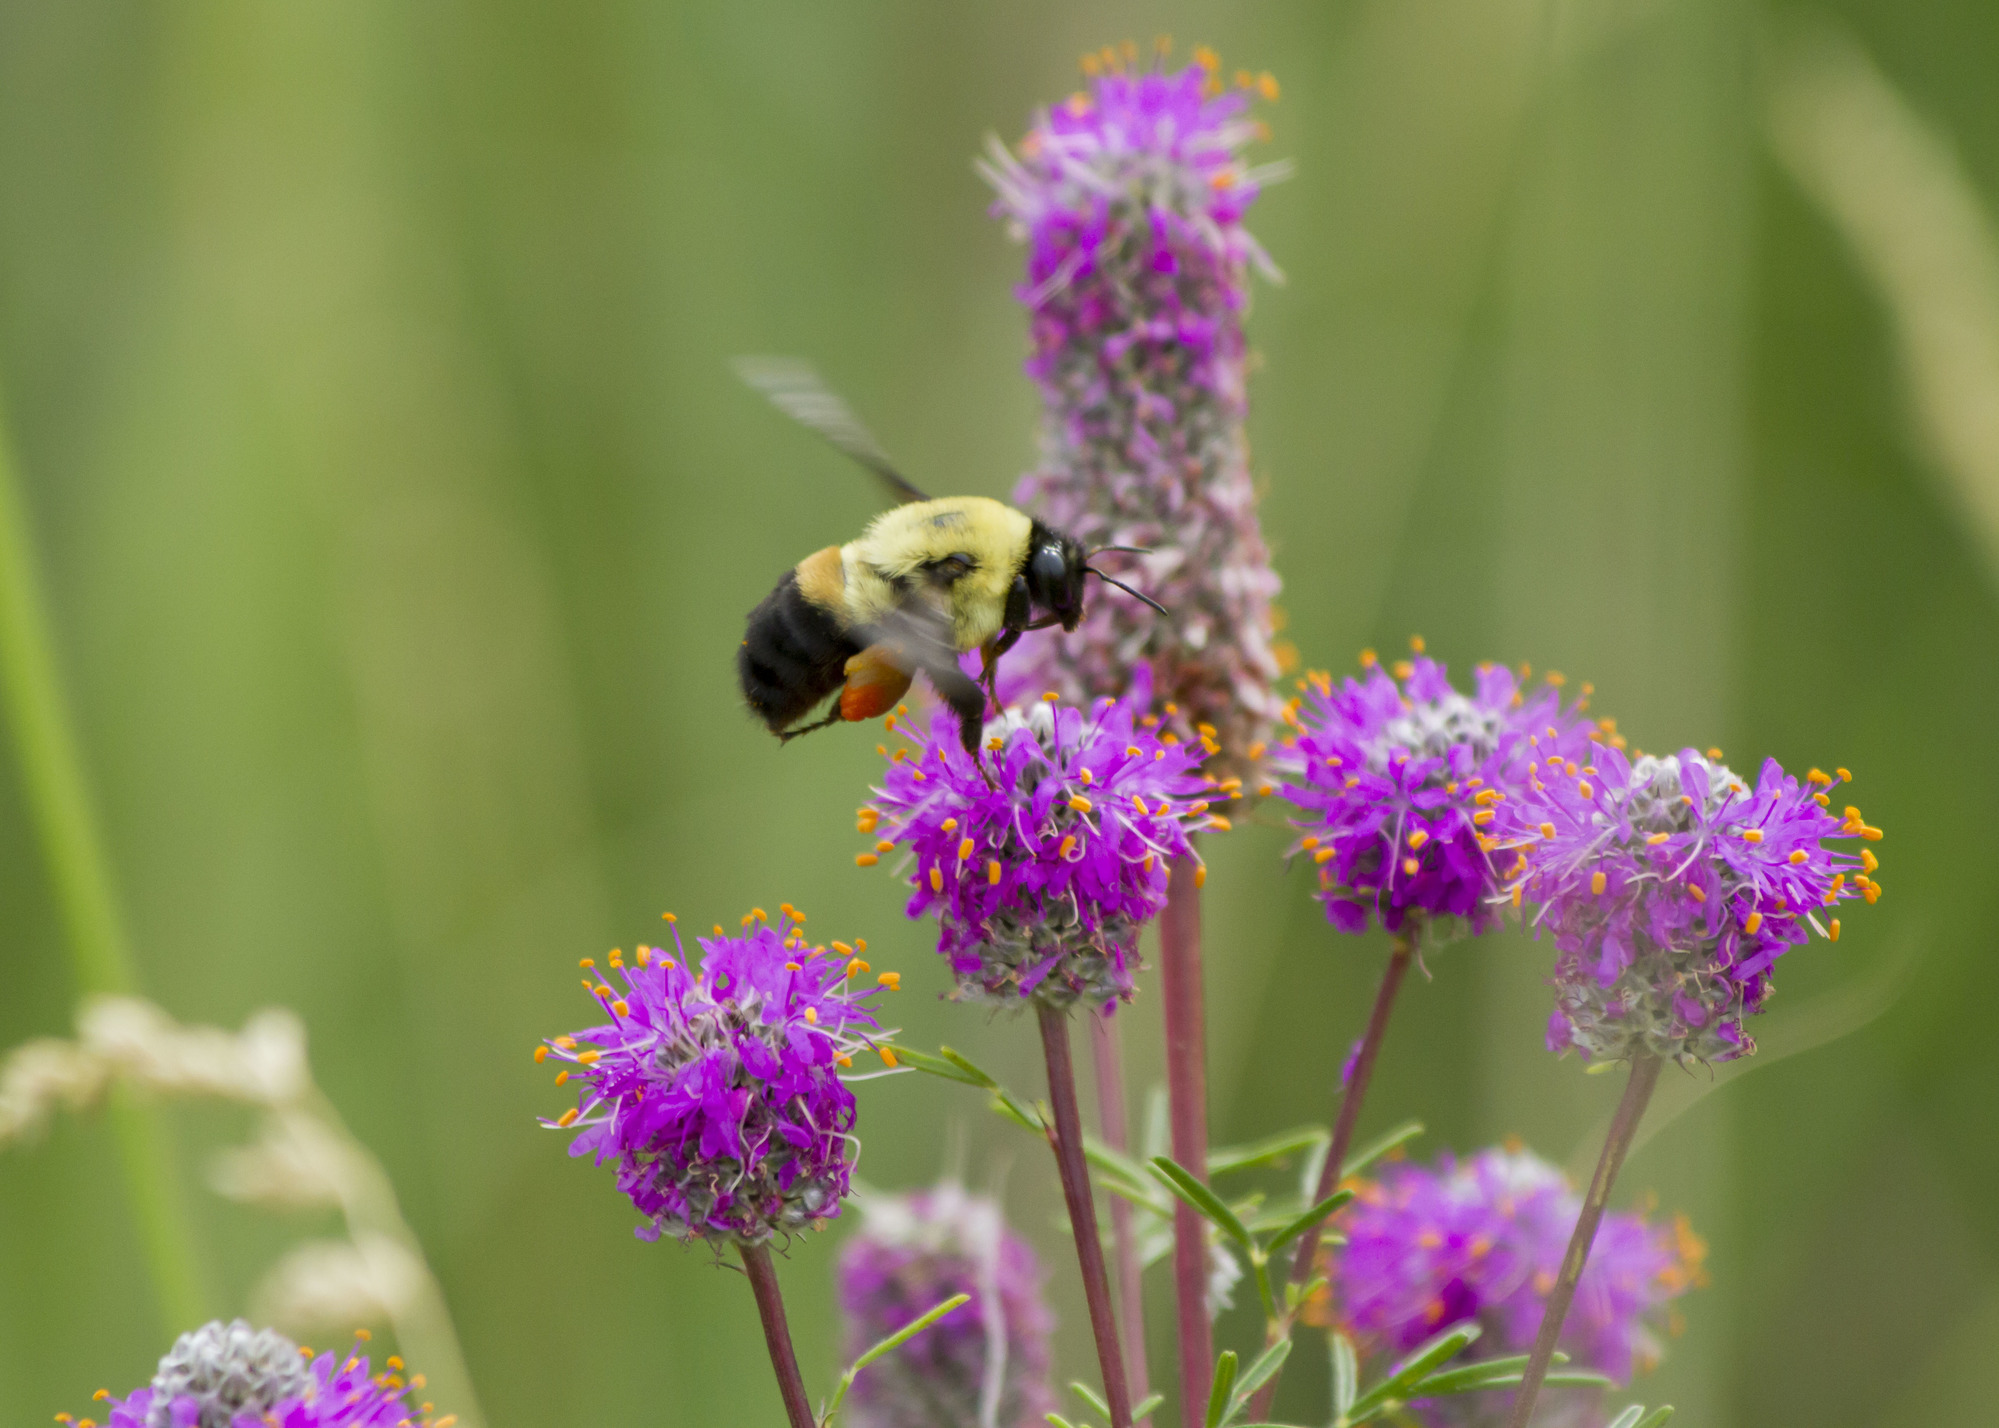 A bumblebee laden with pollen feeds on a purple clover flower.